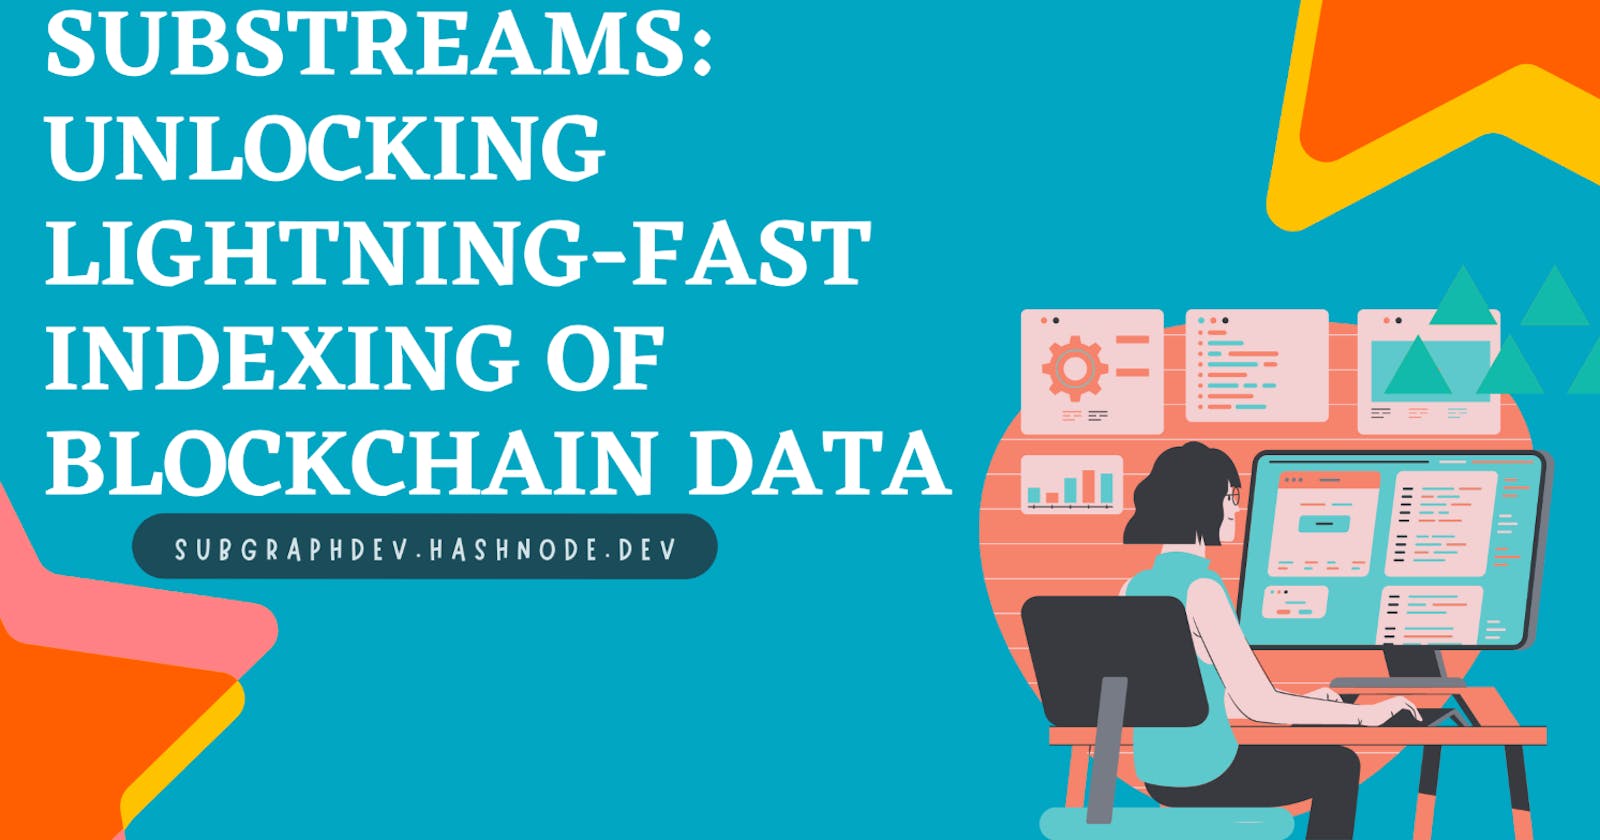 Substreams: Unlocking Lightning-Fast Indexing of Blockchain Data